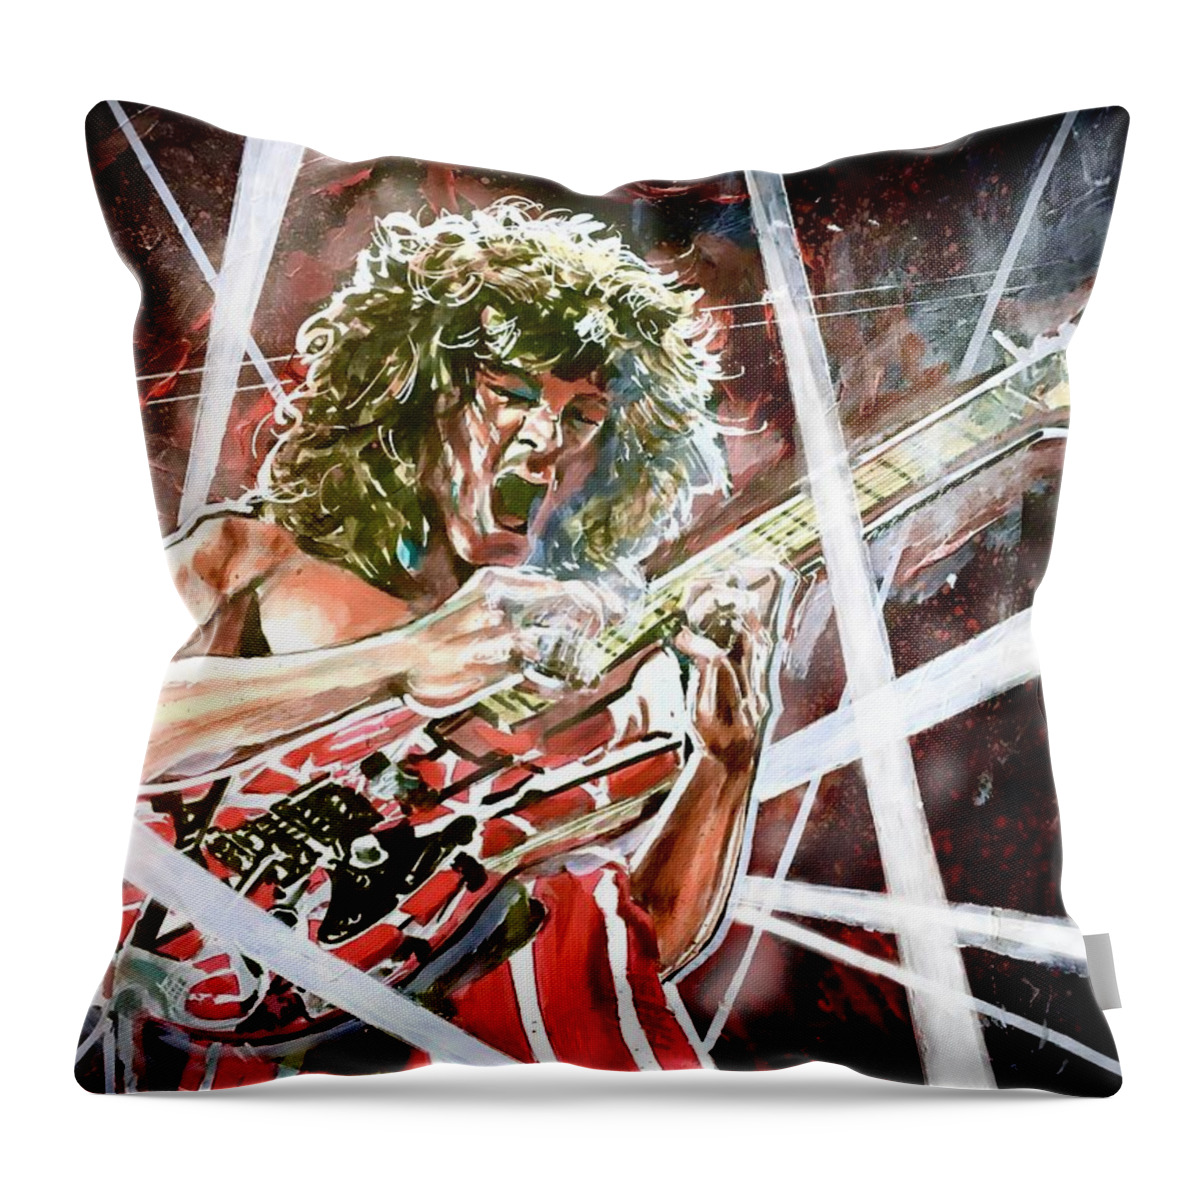 Eddie Van Halen Throw Pillow featuring the painting Eddie Van Halen by Joel Tesch